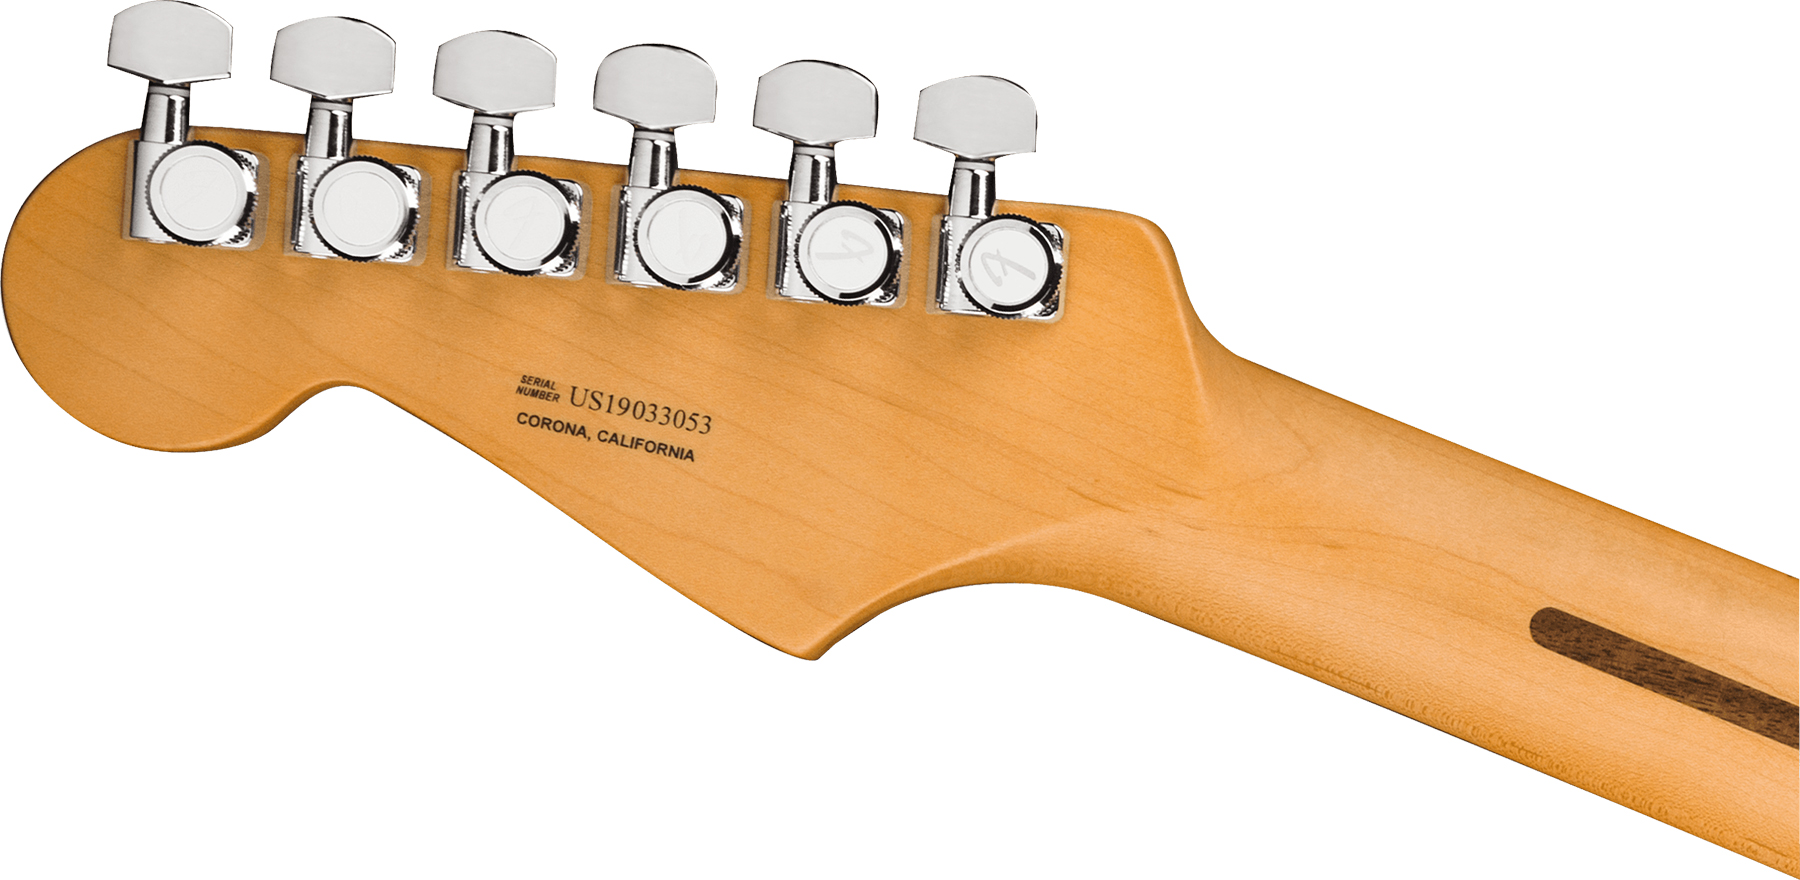 Fender Strat American Ultra 2019 Usa Mn - Ultraburst - Str shape electric guitar - Variation 3